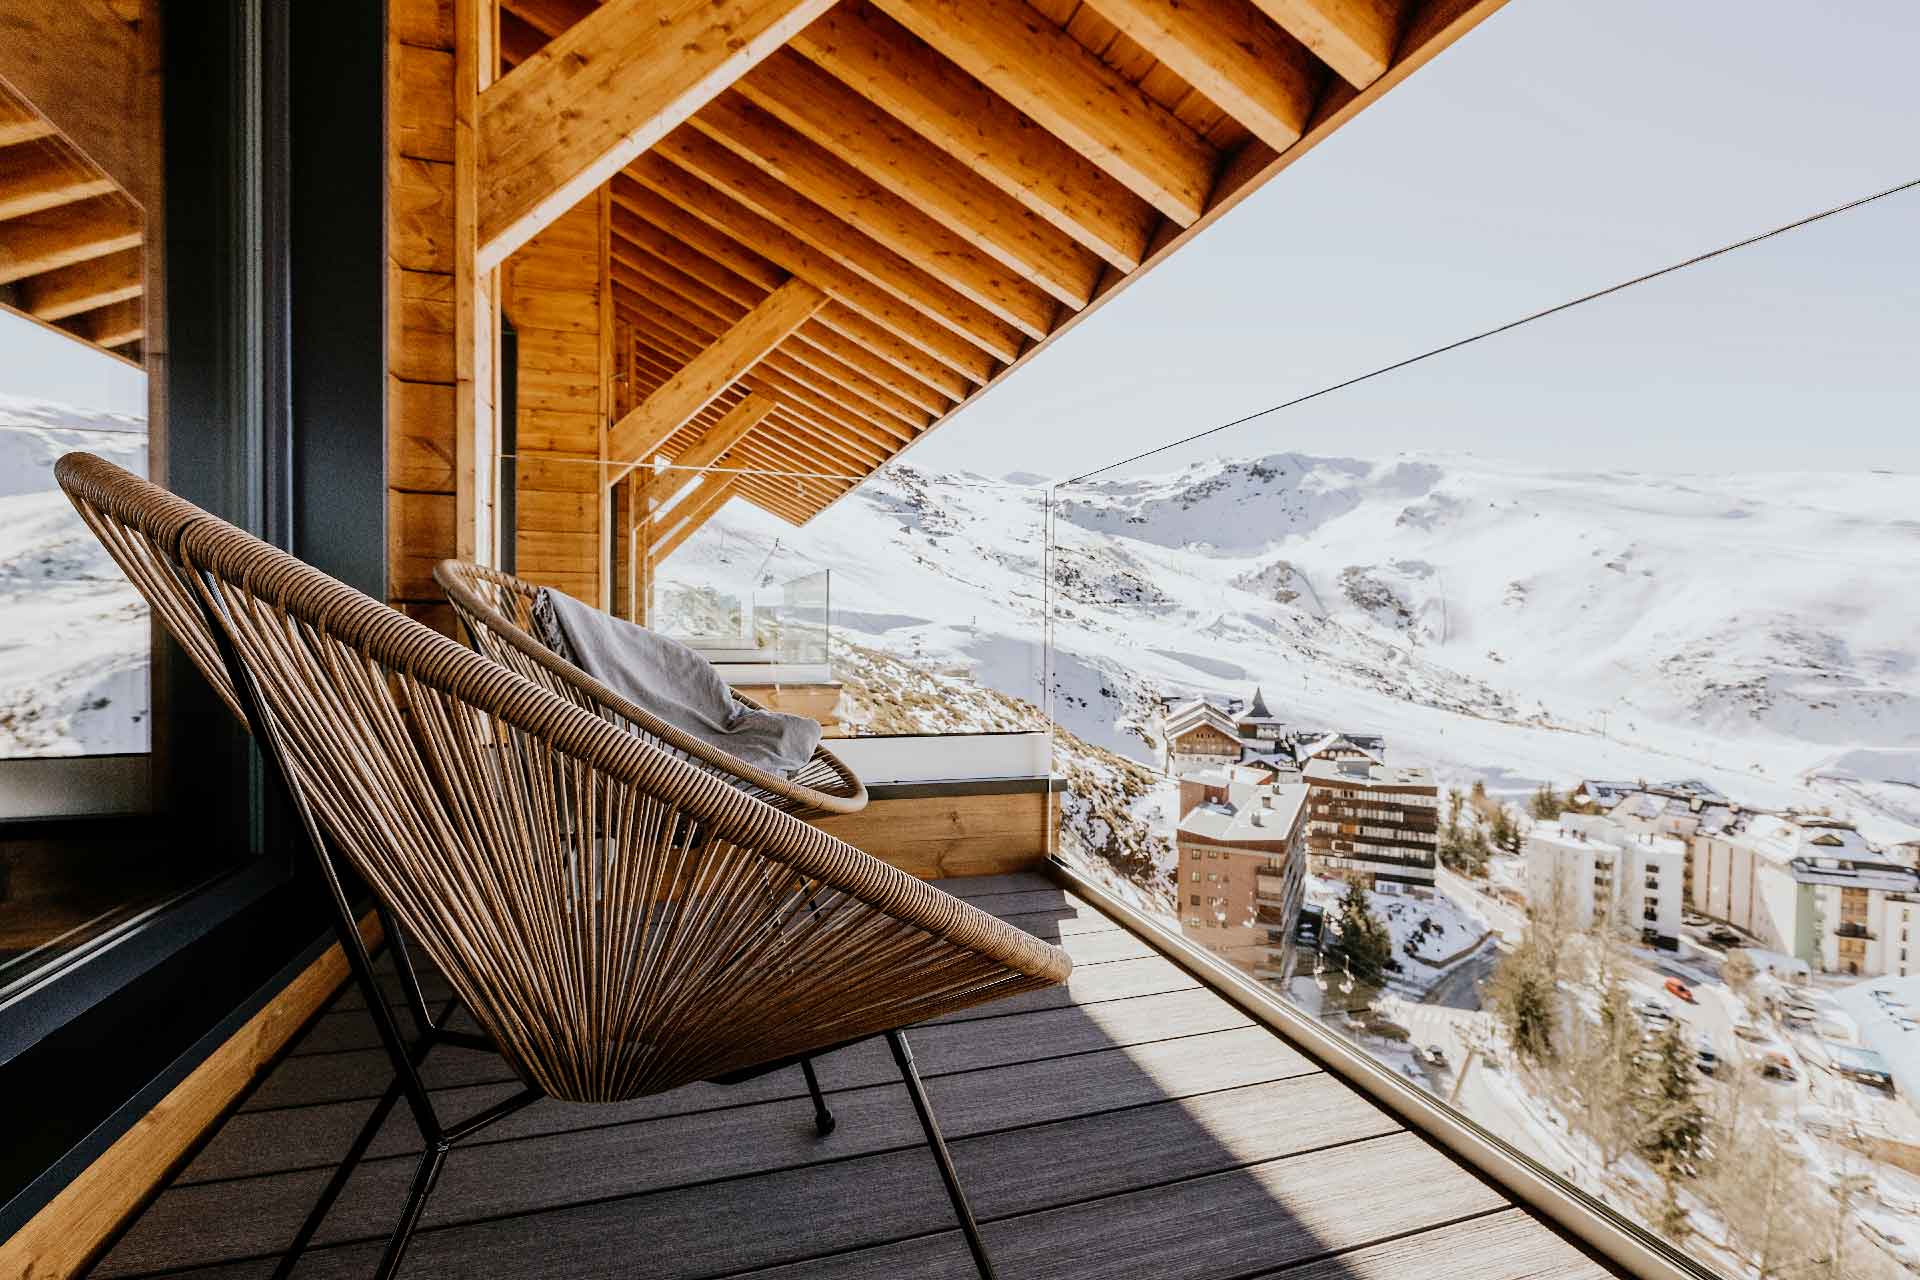 4 Bedroom Luxury Ski Chalet with Panoramic Views of Sierra Nevada